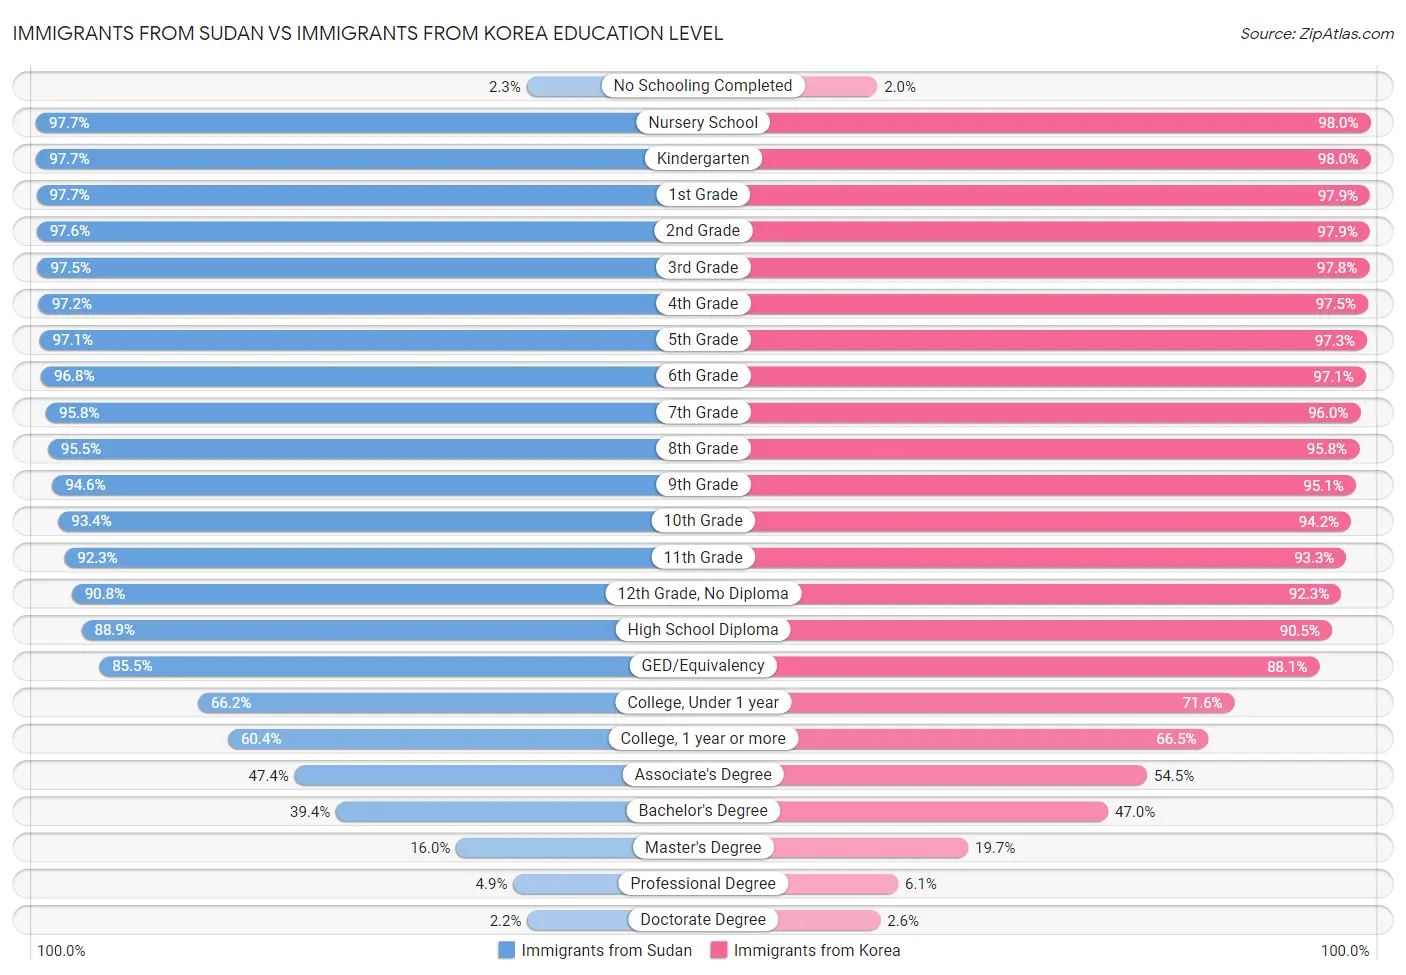 Immigrants from Sudan vs Immigrants from Korea Education Level